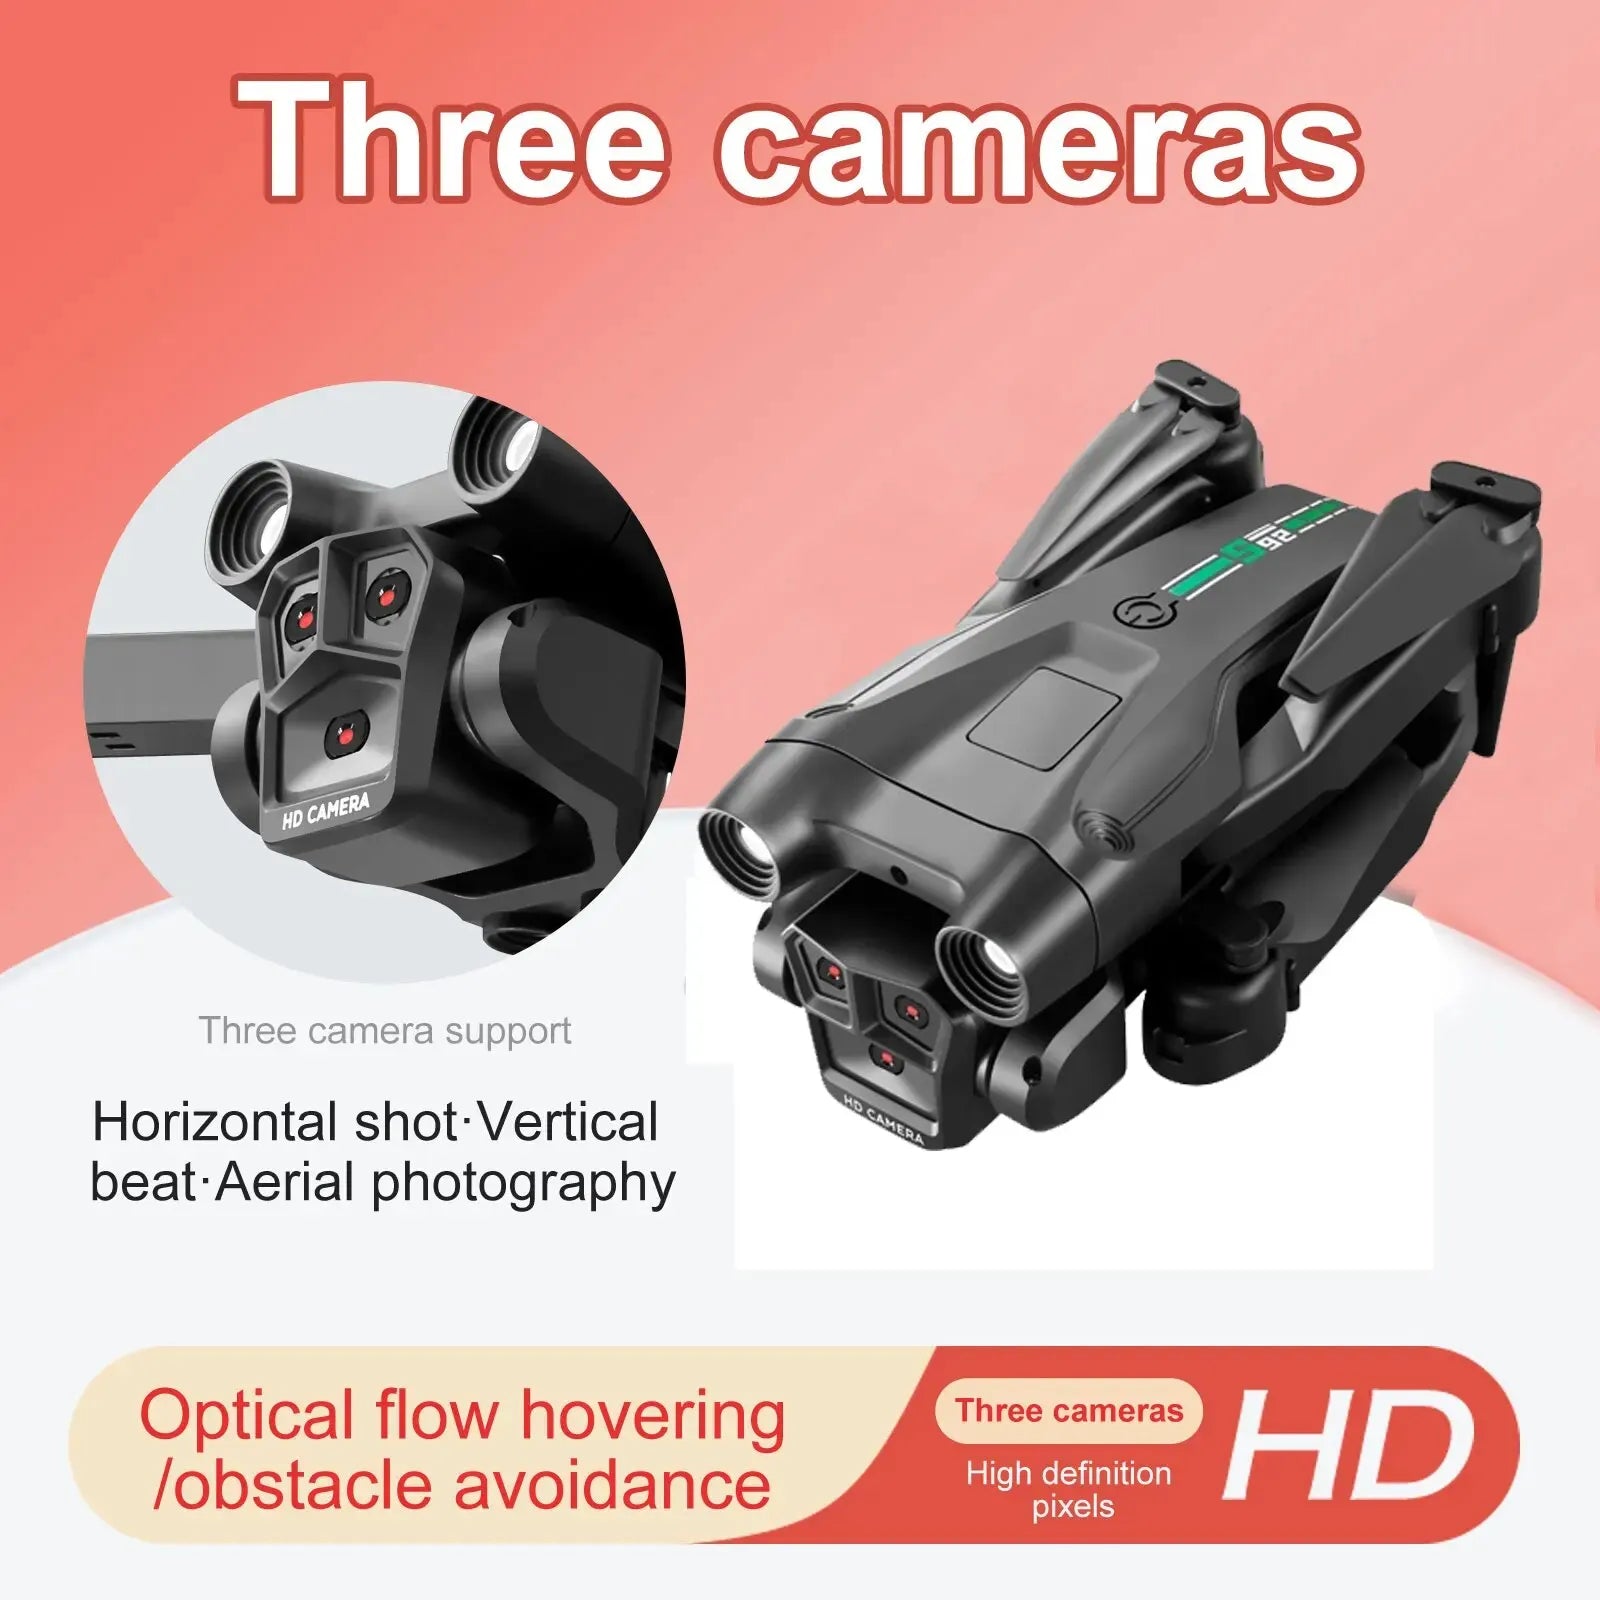 S92 HD Drone: High Grip, Foldable, Mini RC, WiFi, Aerial Photography  petlums.com   